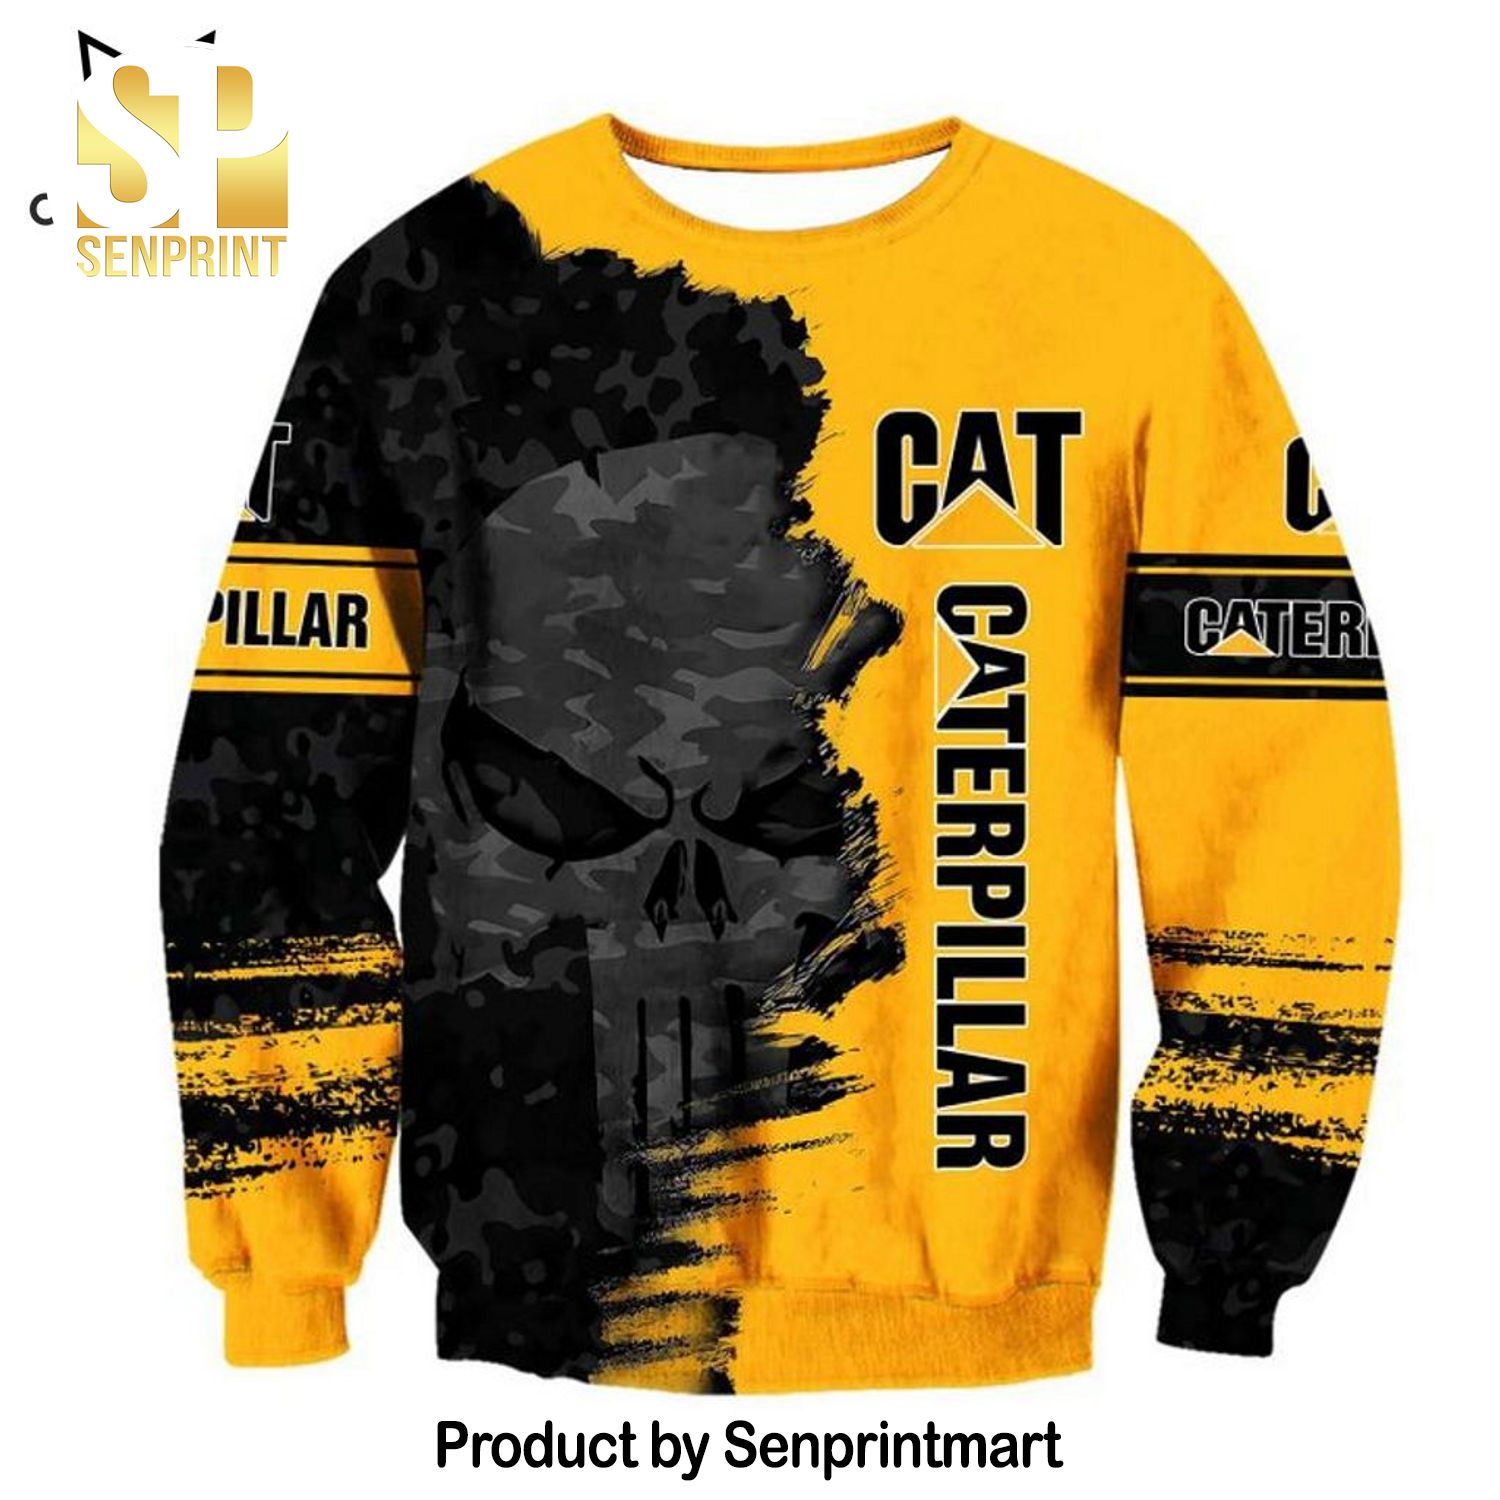 Caterphillar Black Yellow Design Full Printed Shirt